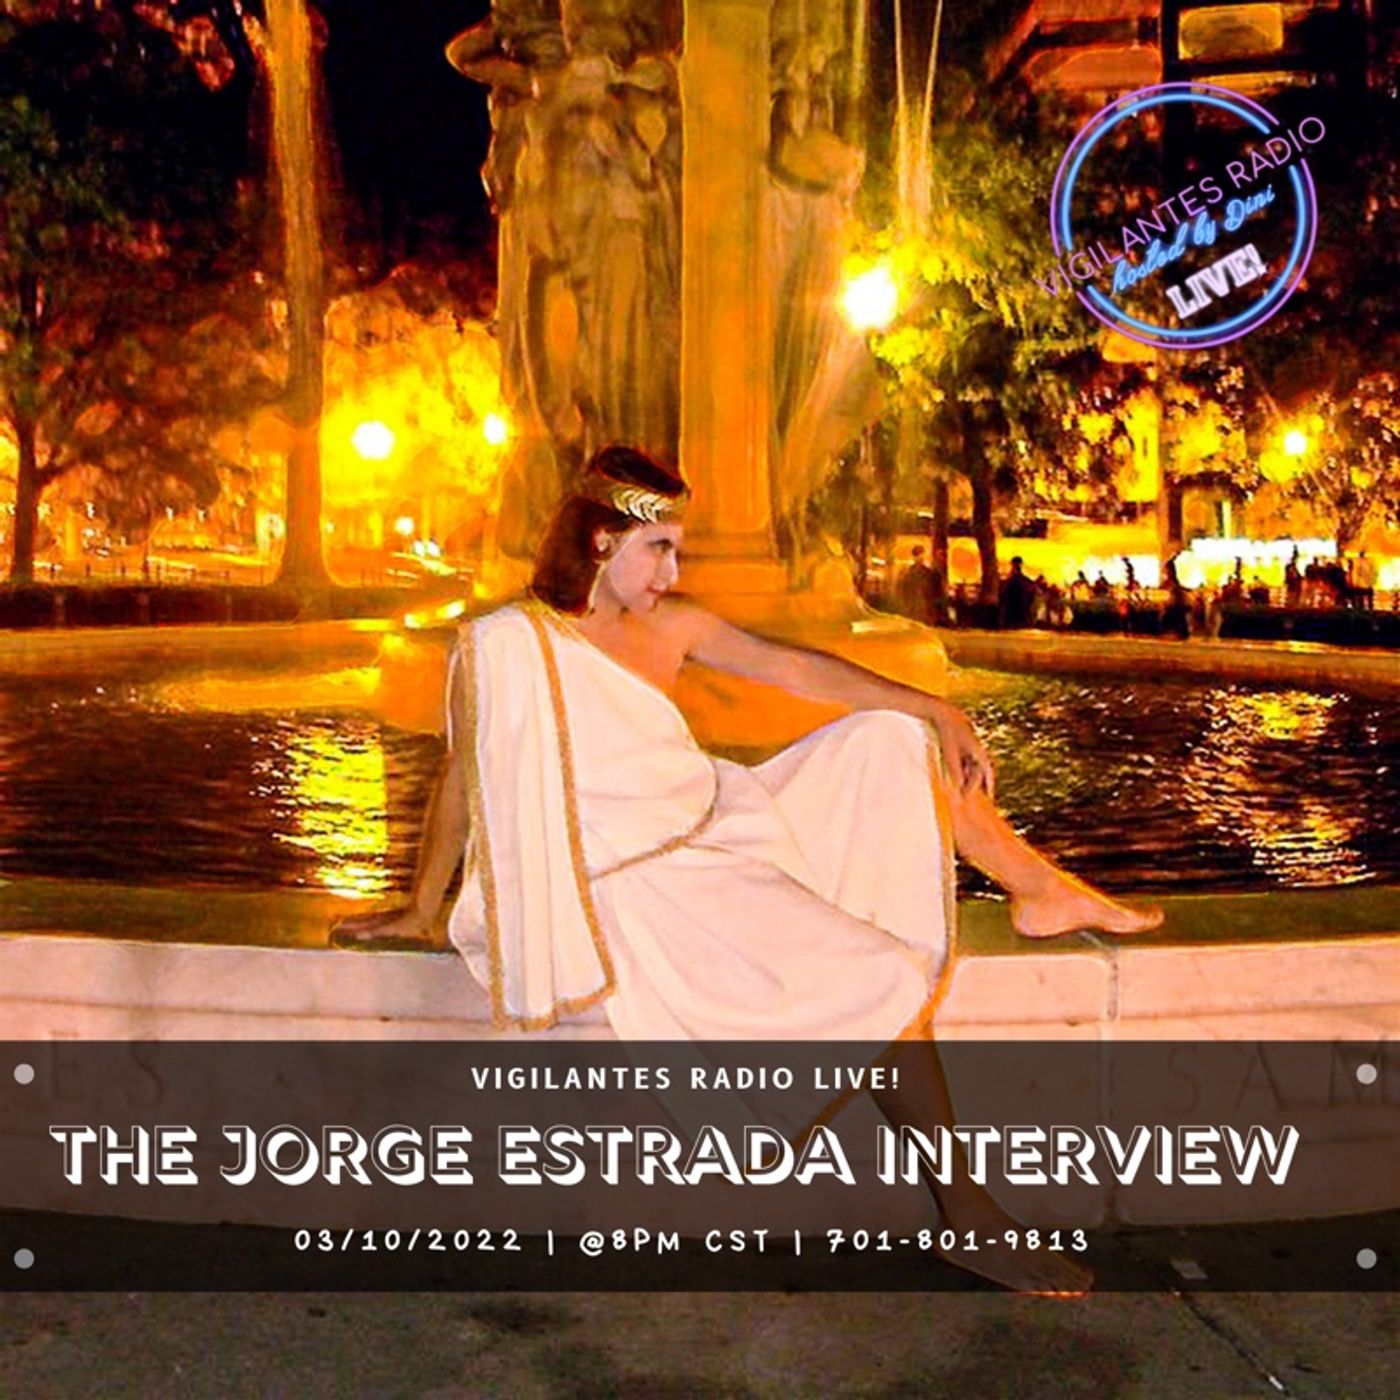 The Jorge Estrada Interview. Image